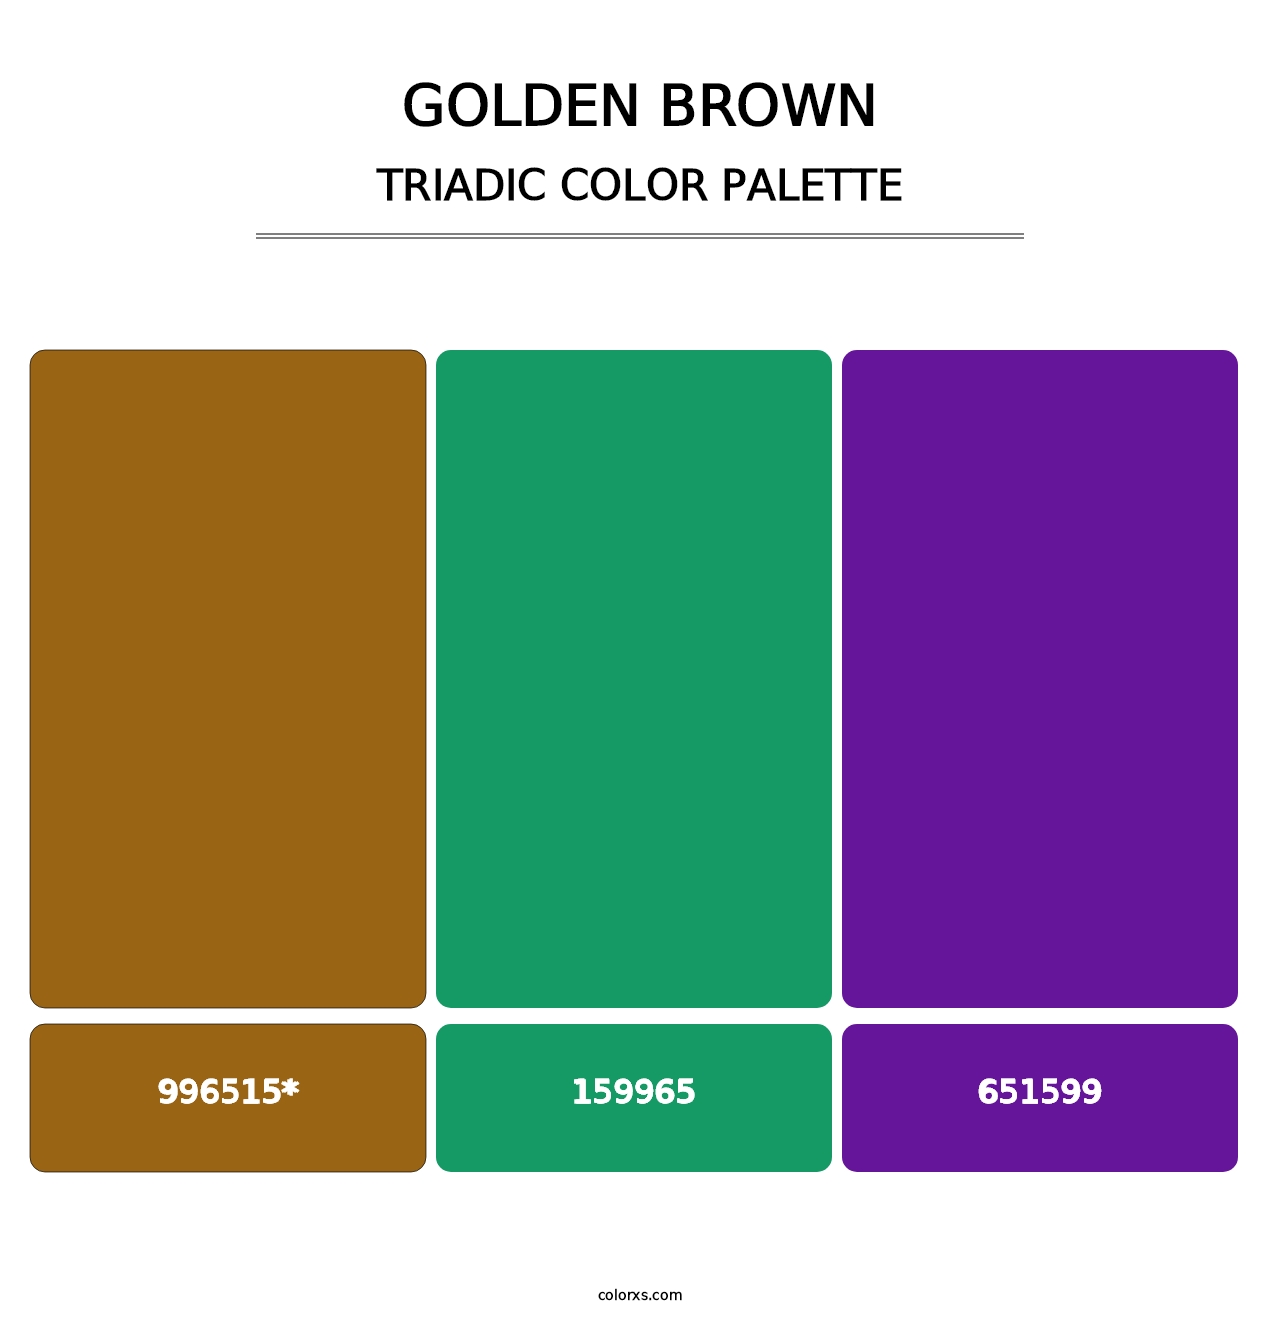 Golden brown - Triadic Color Palette